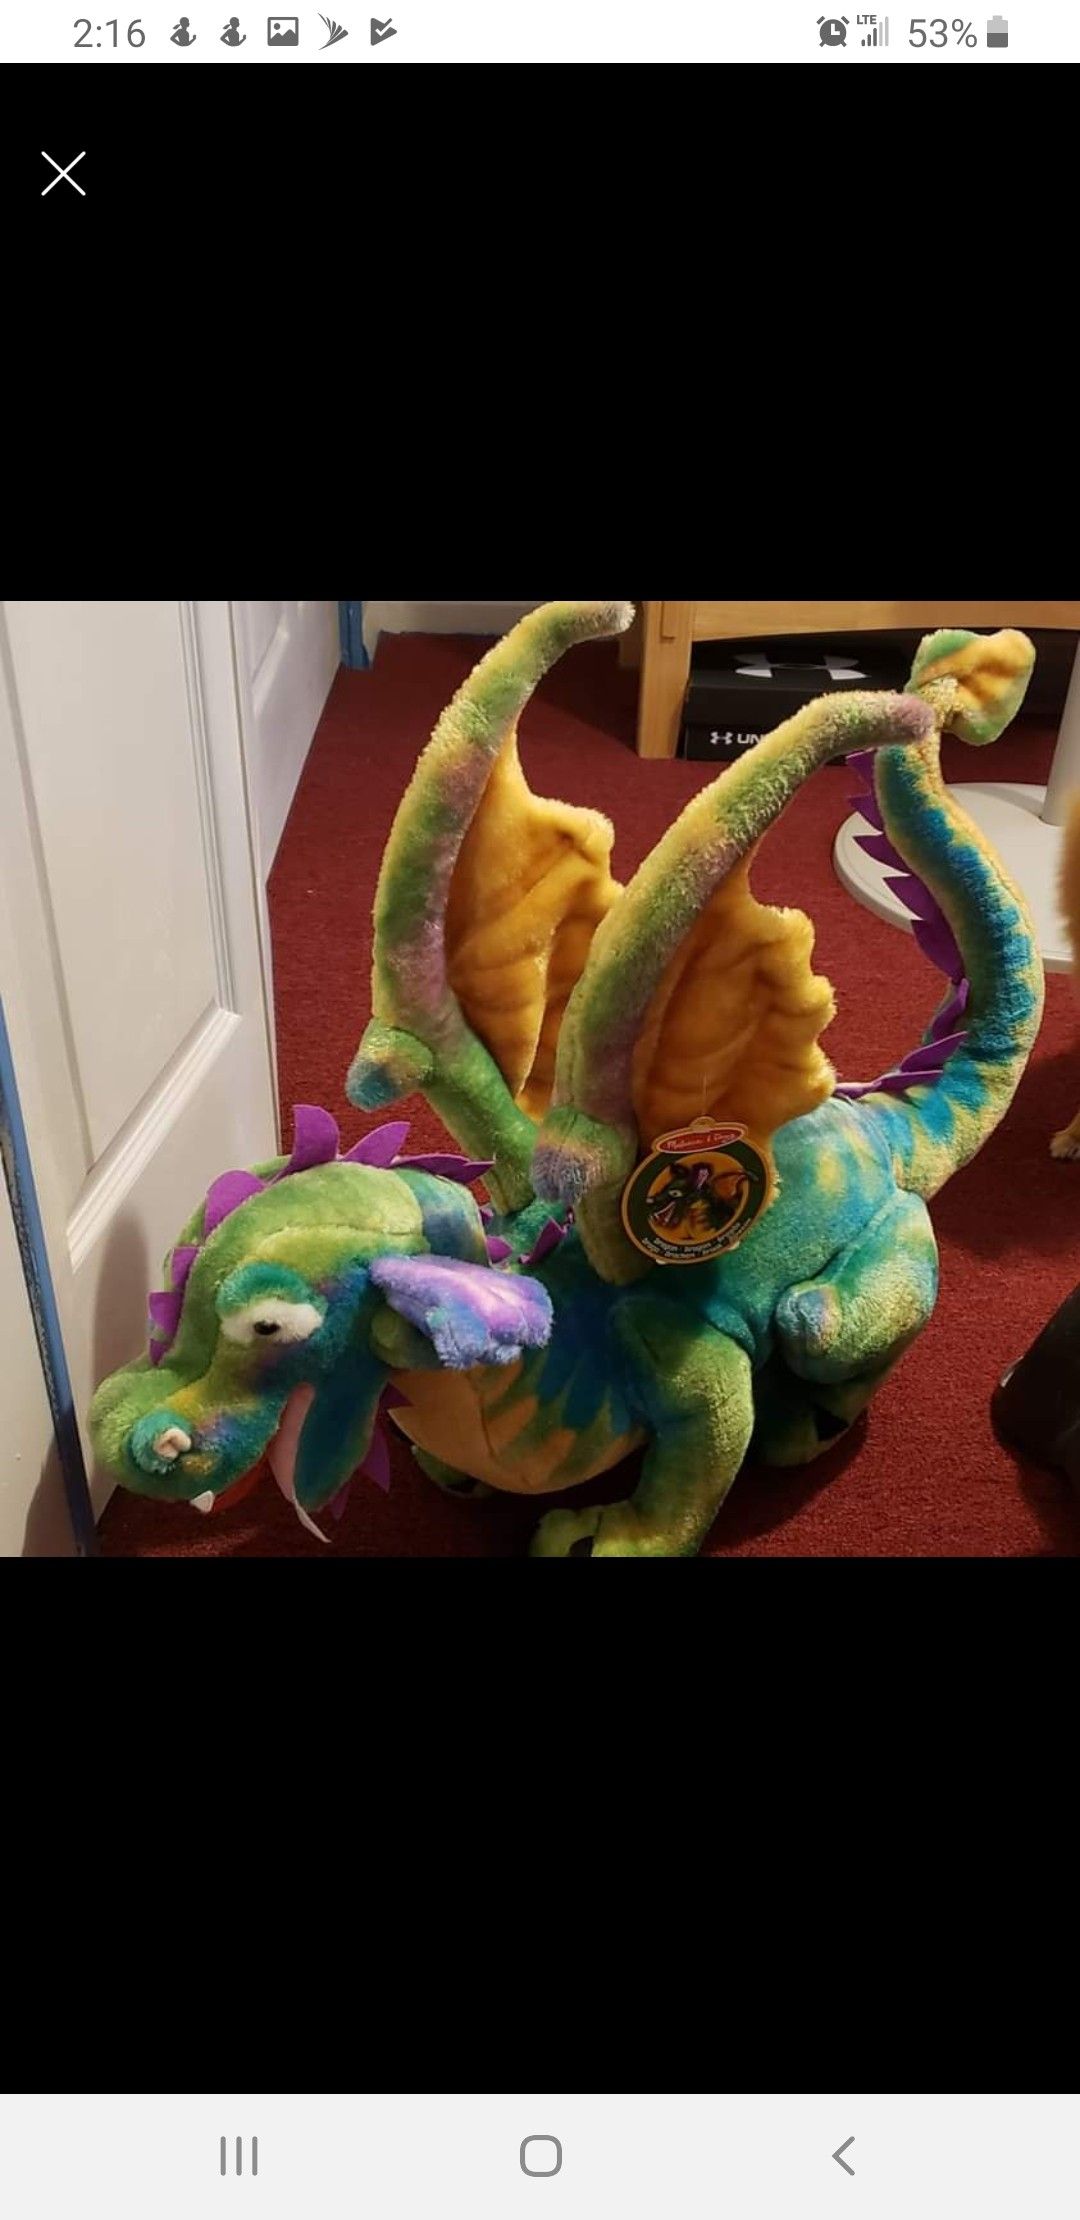 Big dragon stuffed animal